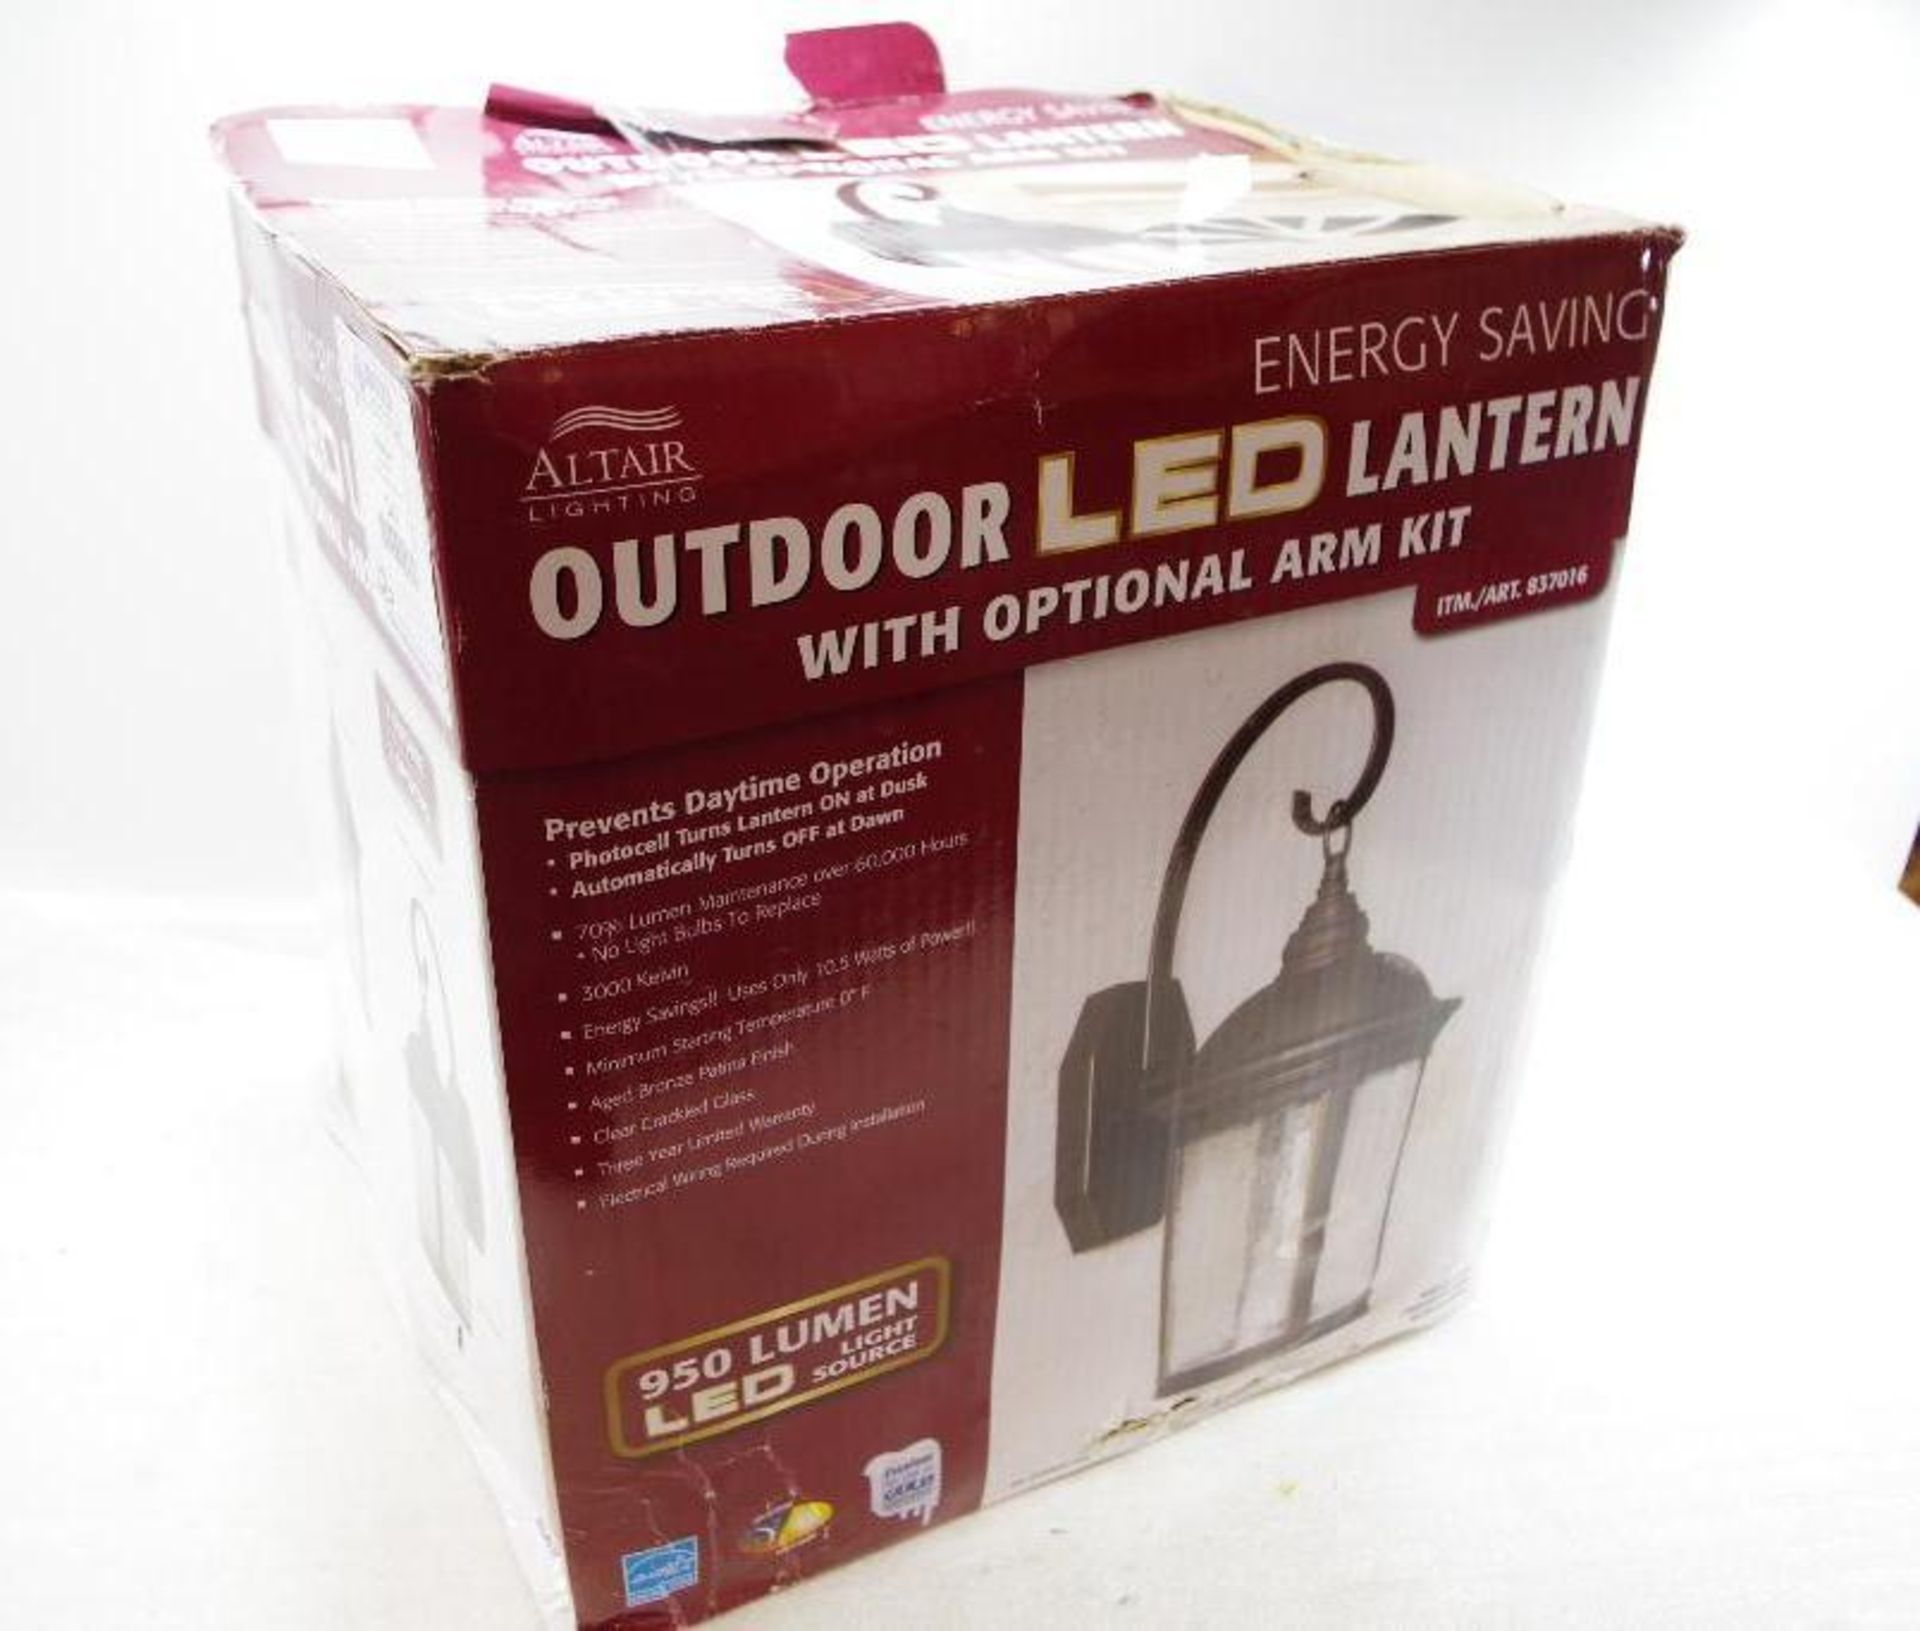 ALTAIR LIGHTING 950 Lumen Outdoor LED Lantern w/ Optional Arm Kit (Store Return) - Image 2 of 3